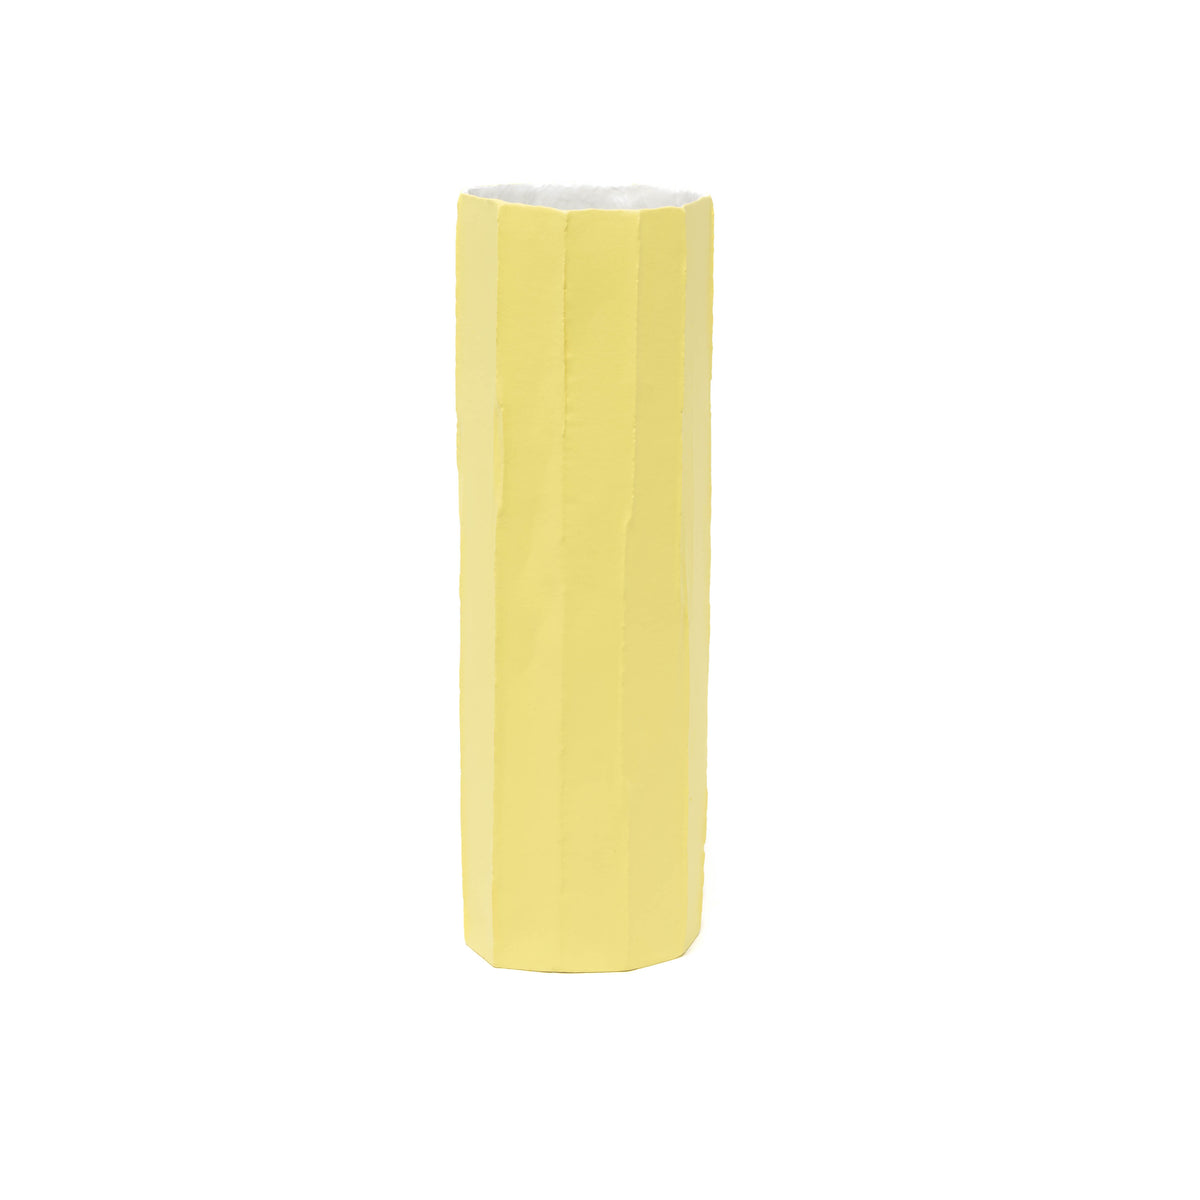 Mono vase paperclay H28, D18